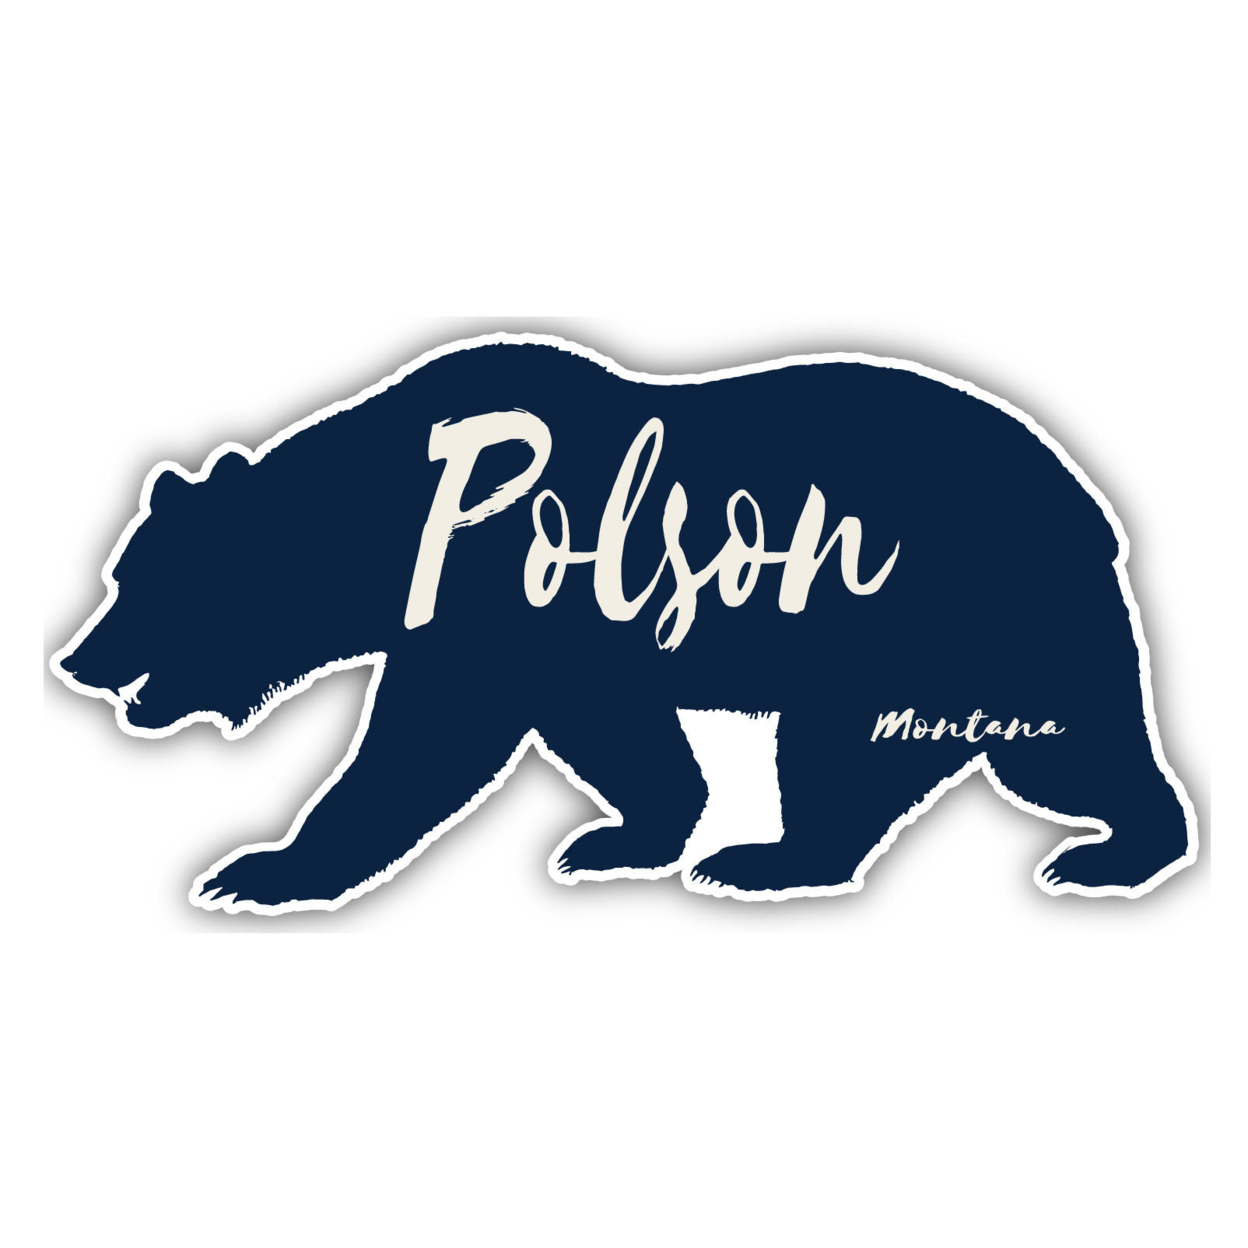 Polson Montana Souvenir Decorative Stickers (Choose Theme And Size) - Single Unit, 4-Inch, Bear